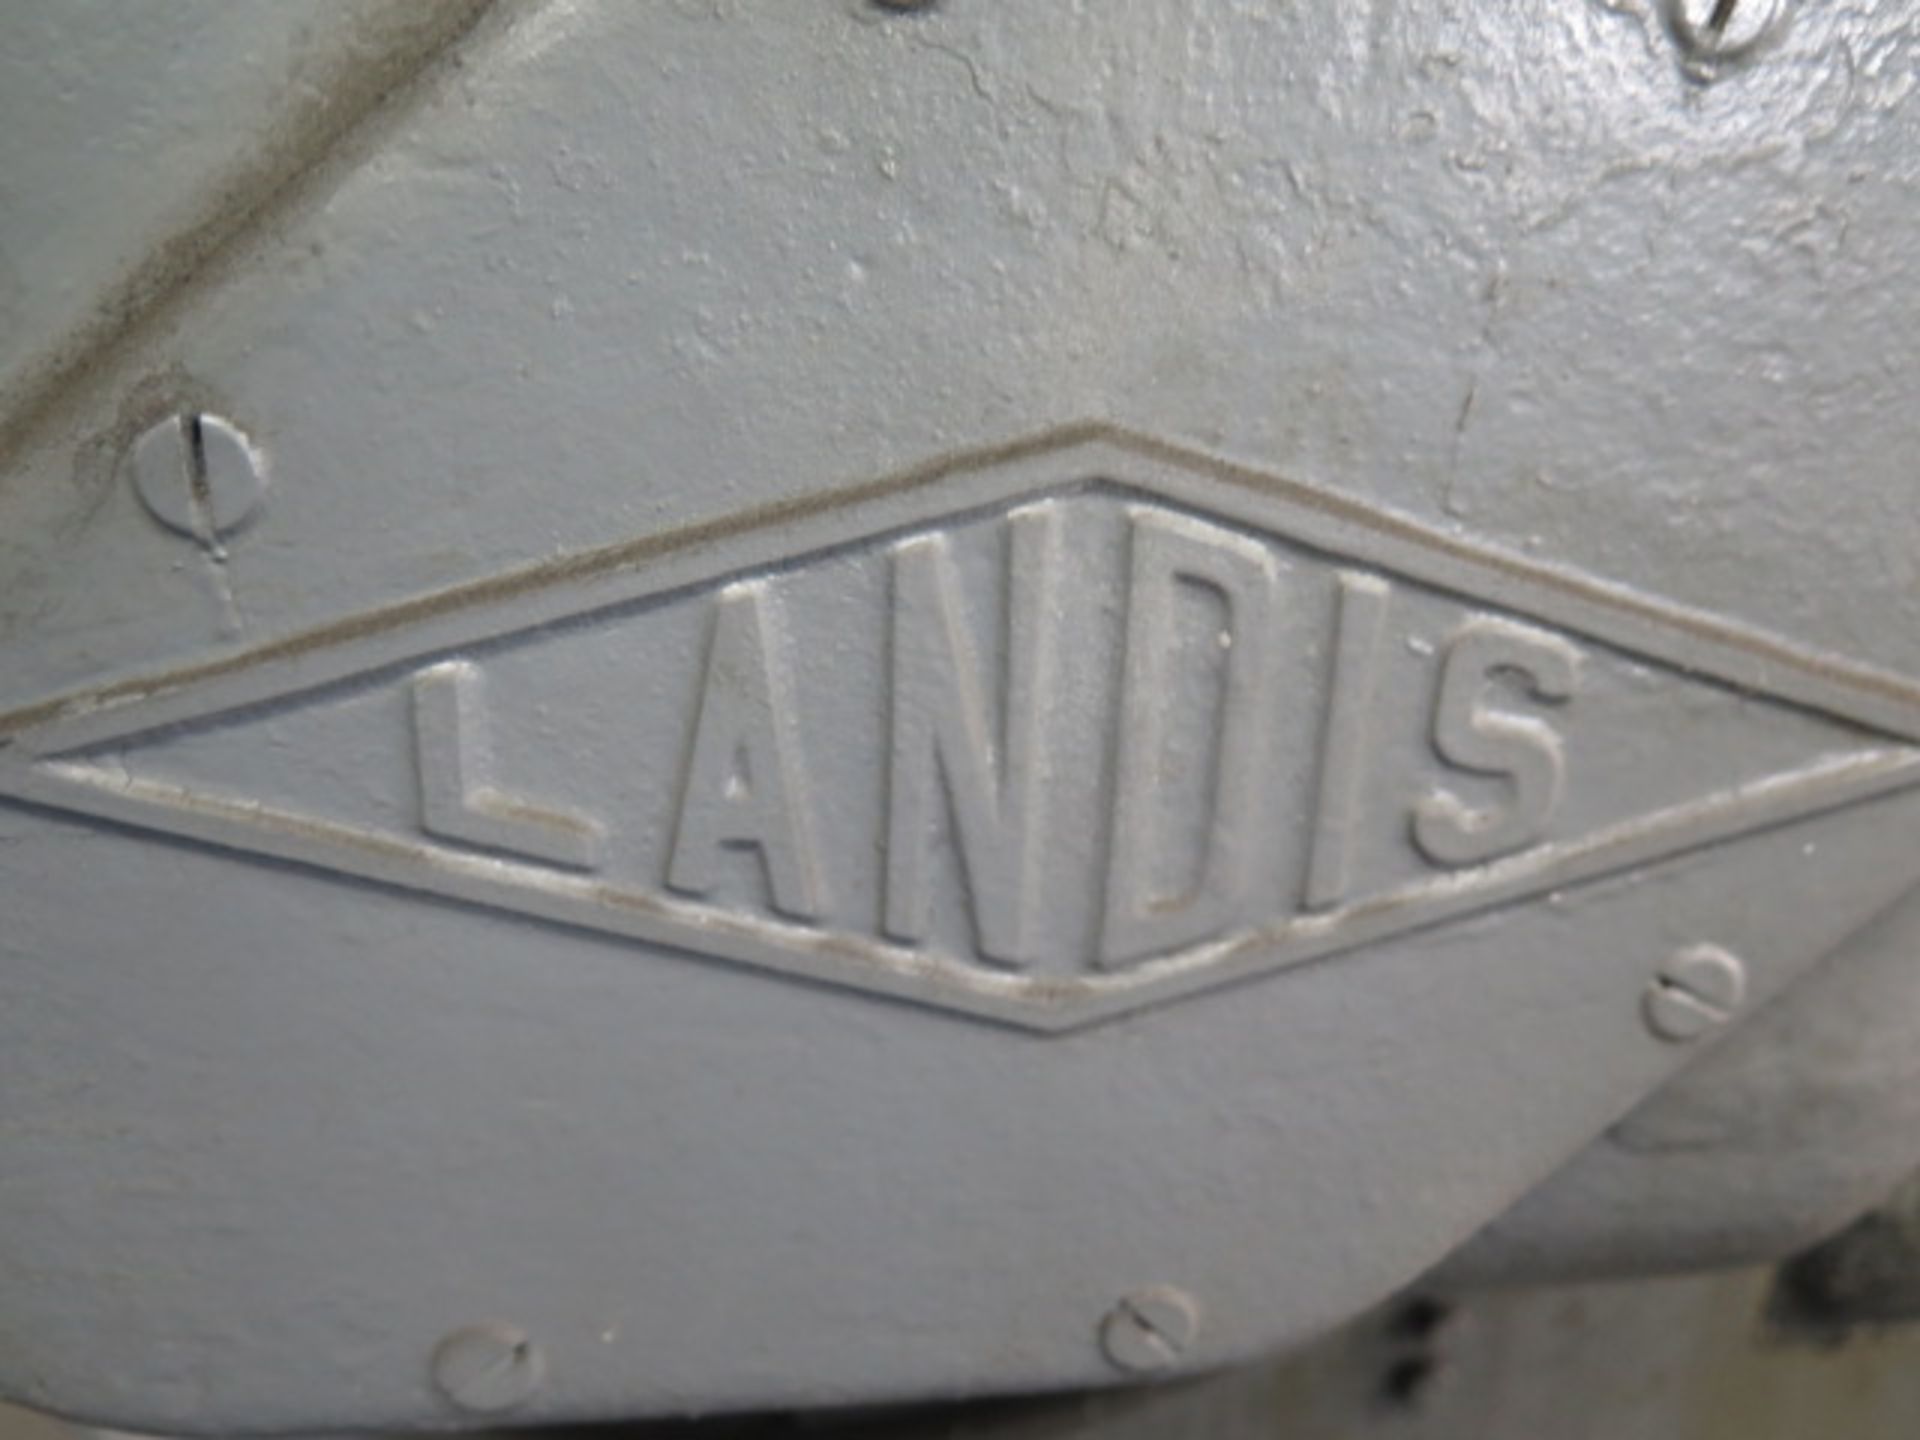 Landis Power Pipe Threader w/ 11” Threading Head, 2 ½” Thru Head - Image 3 of 9